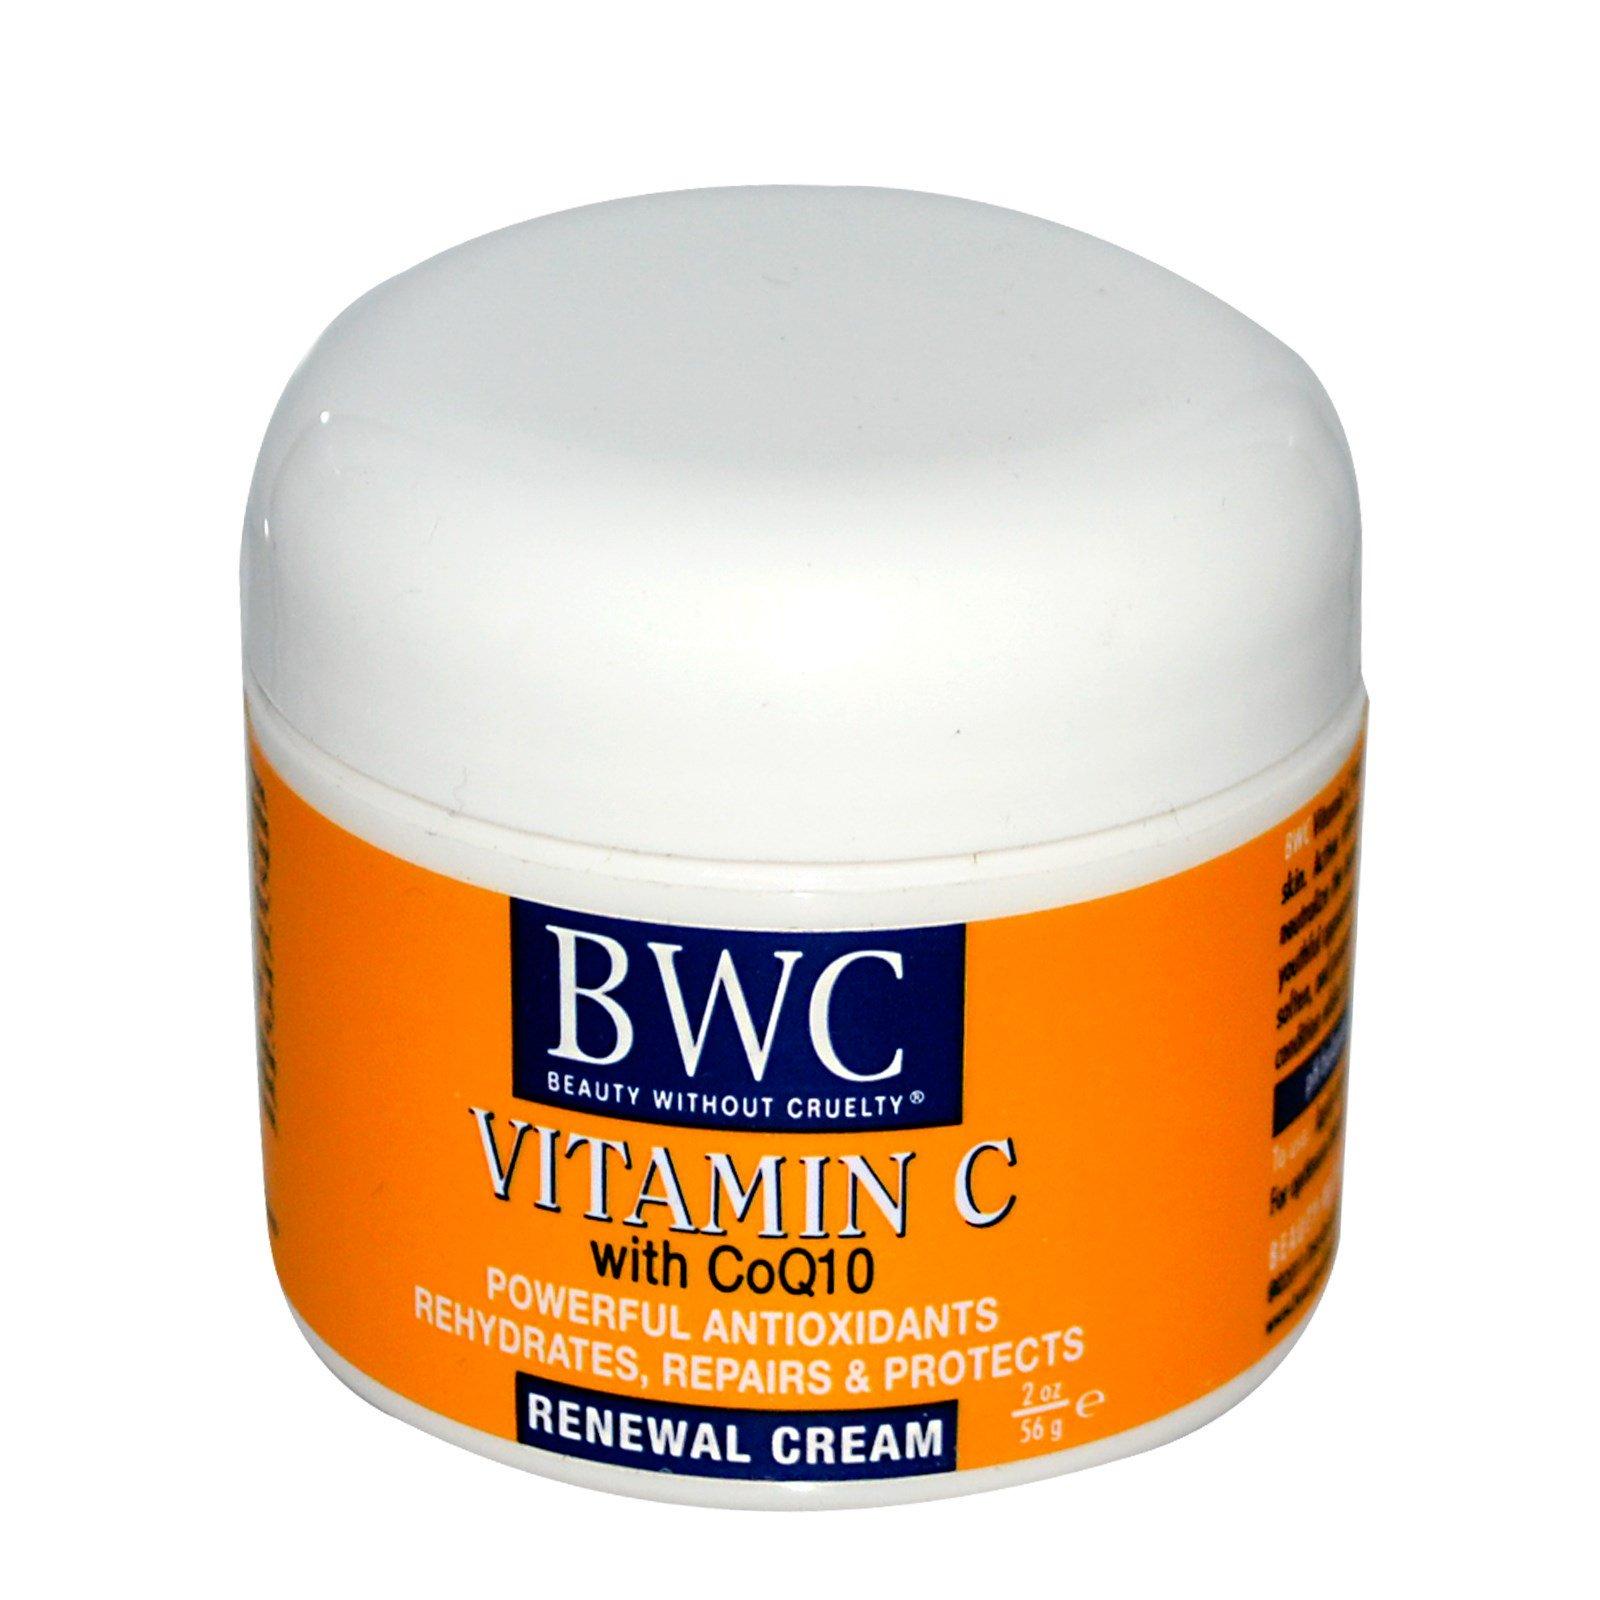 Vitamin C with CoQ10 Renewal Cream